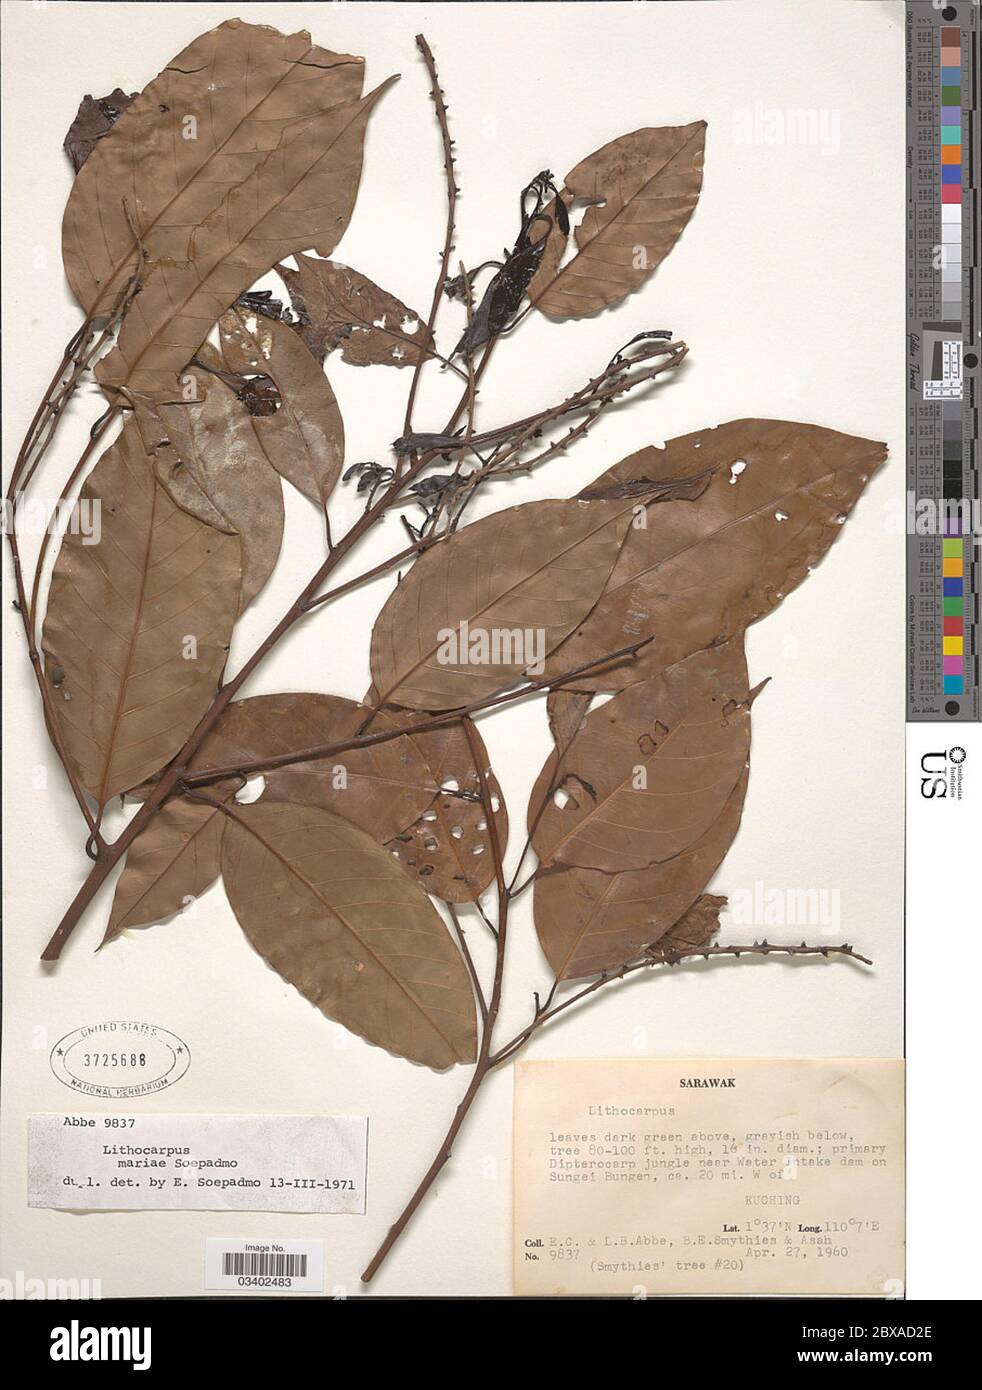 Lithocarpus mariae Soepadmo Lithocarpus mariae Soepadmo. Stock Photo